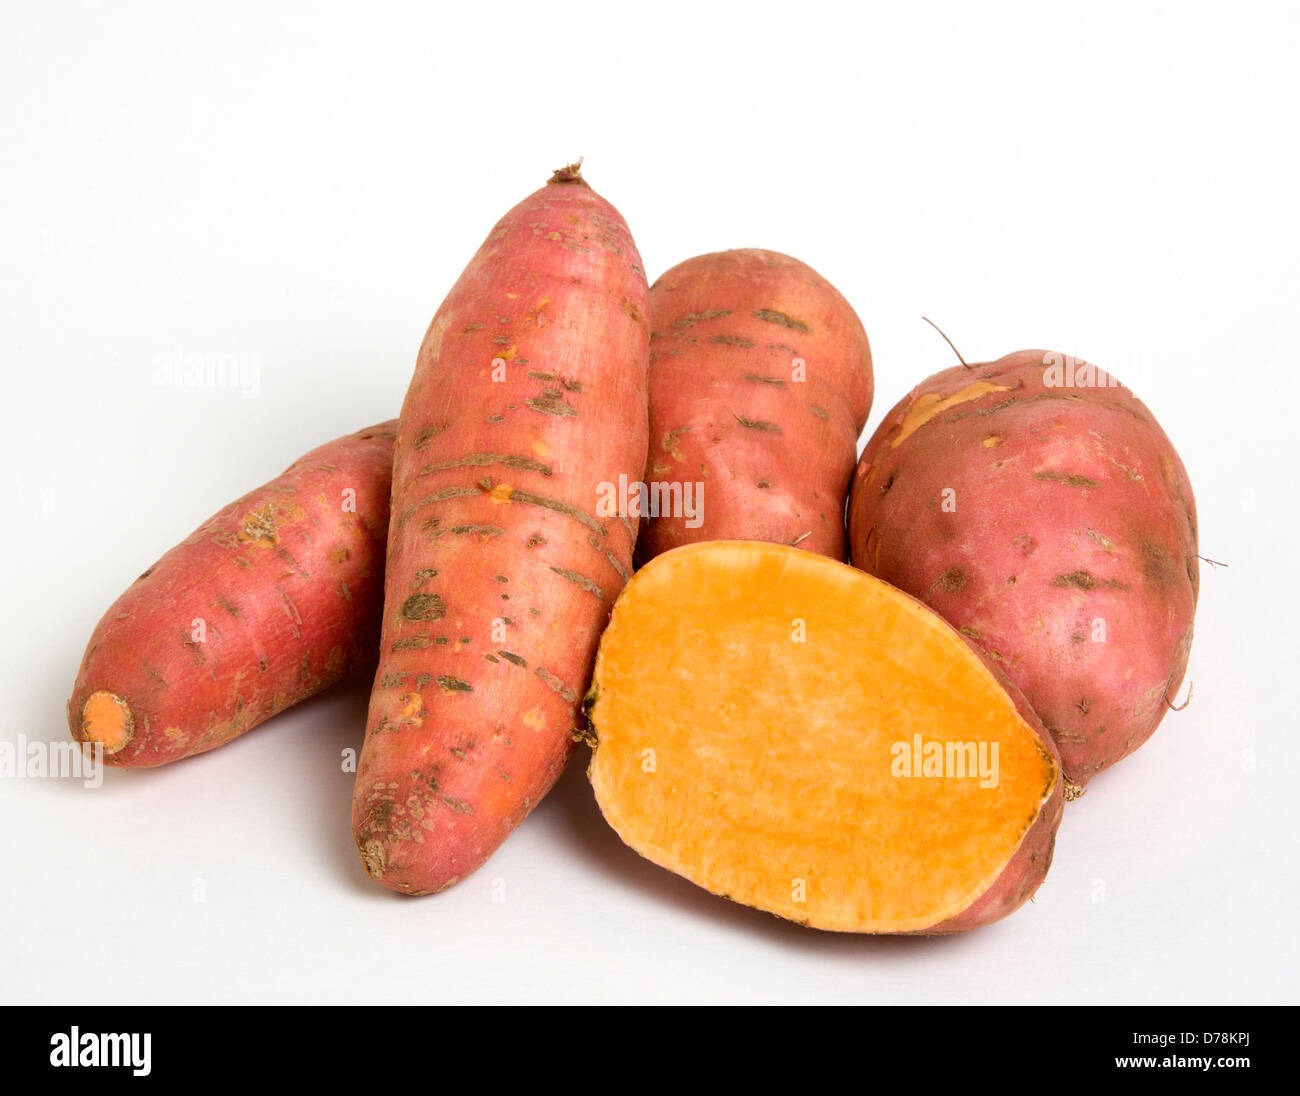 Group shot of Sweet potato, Ipomoea batatas on a white background with one potato cut in half to show the orange interior. Stock Photo